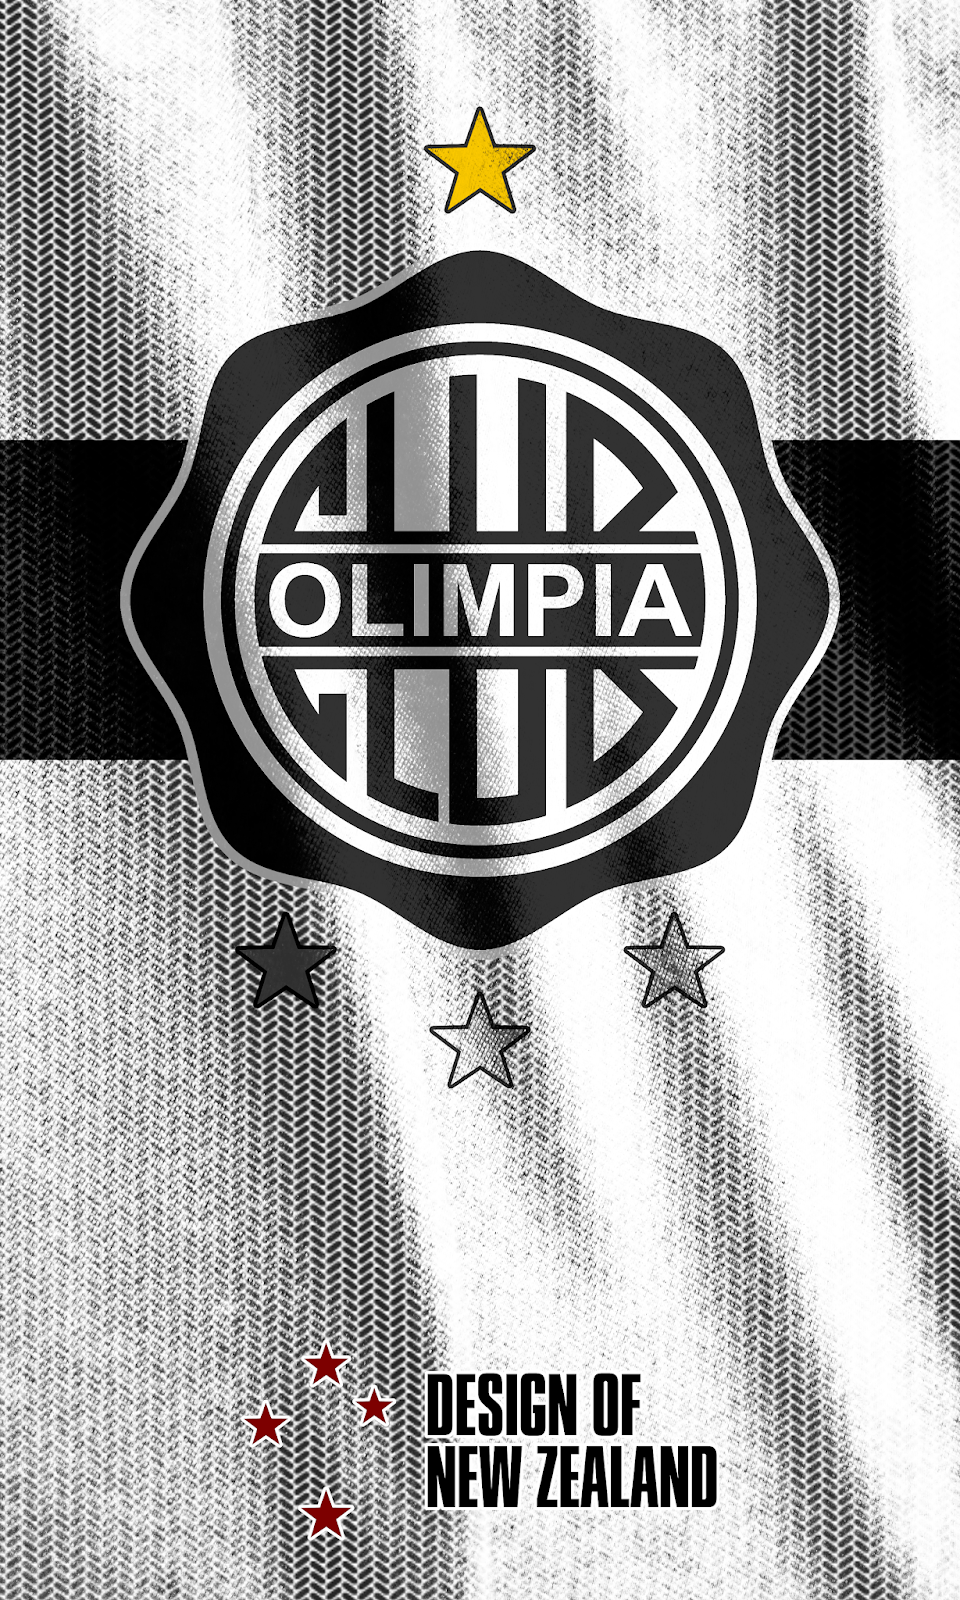 Wallpaper Club Olimpia. LOGOS E UNIFORMES. Football, Juventus logo